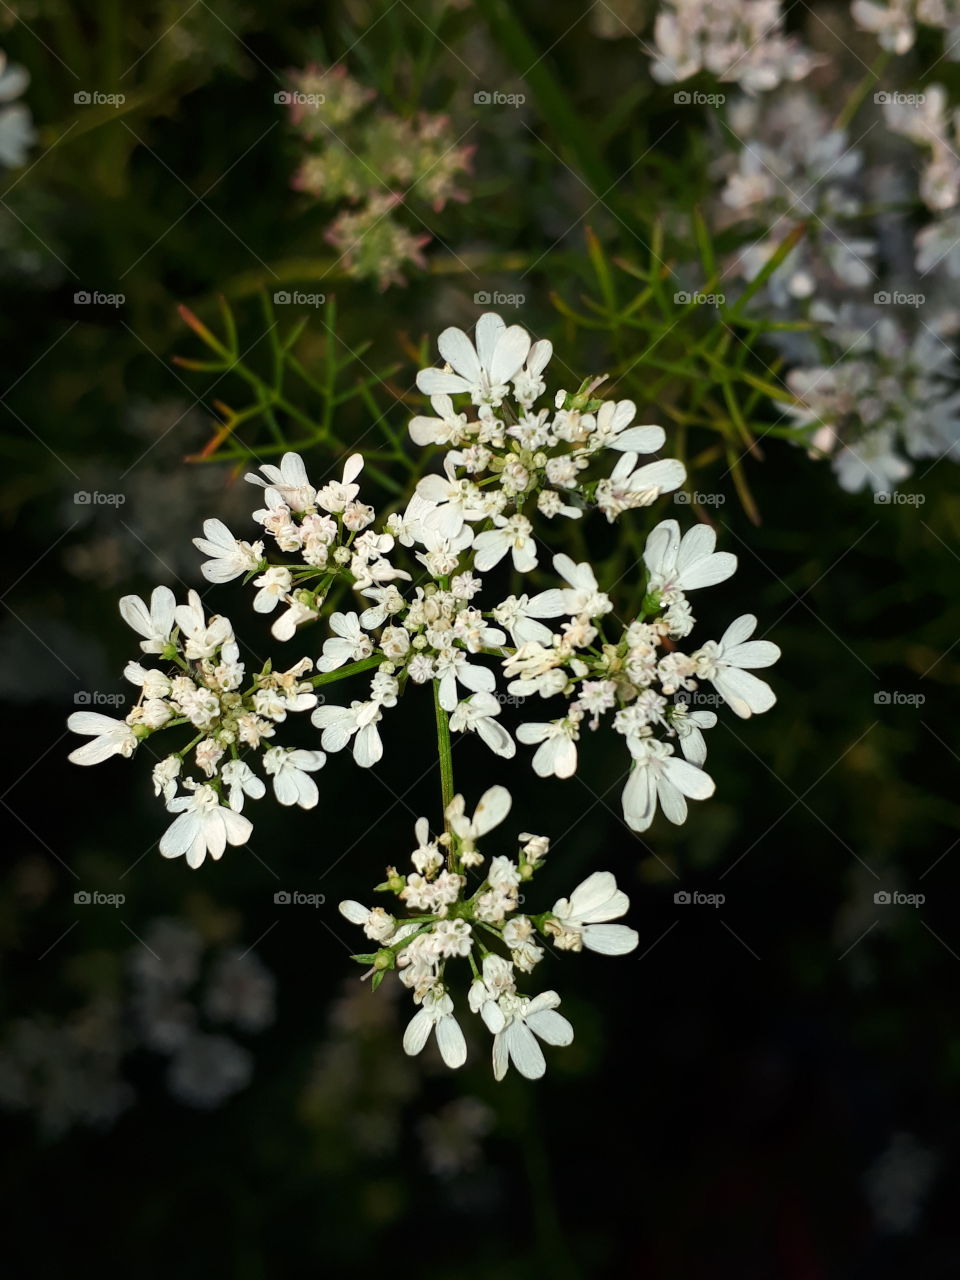 coriander flowers